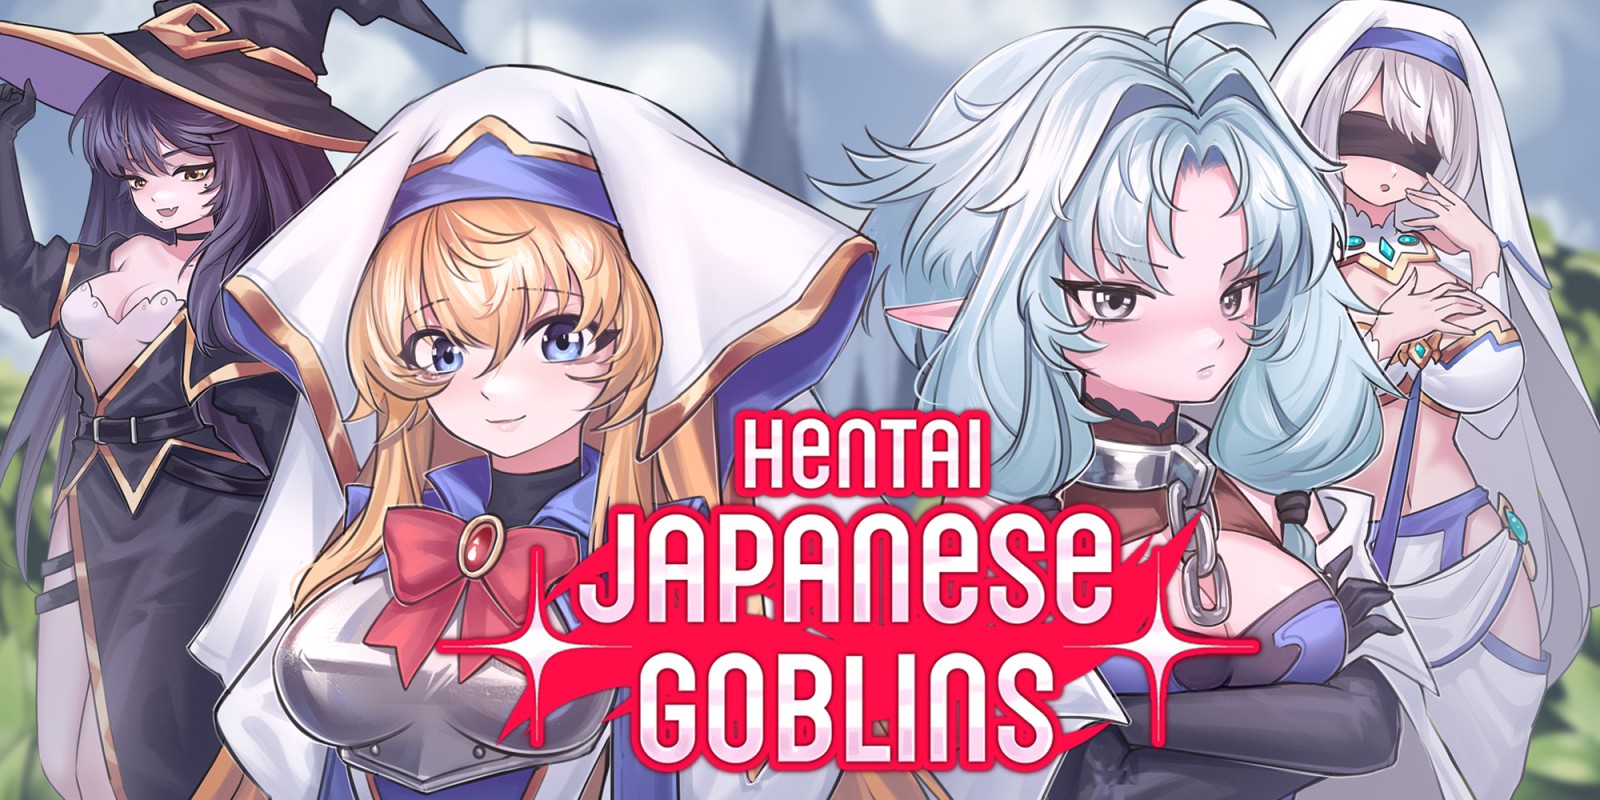 Hentai: Japanese Goblins